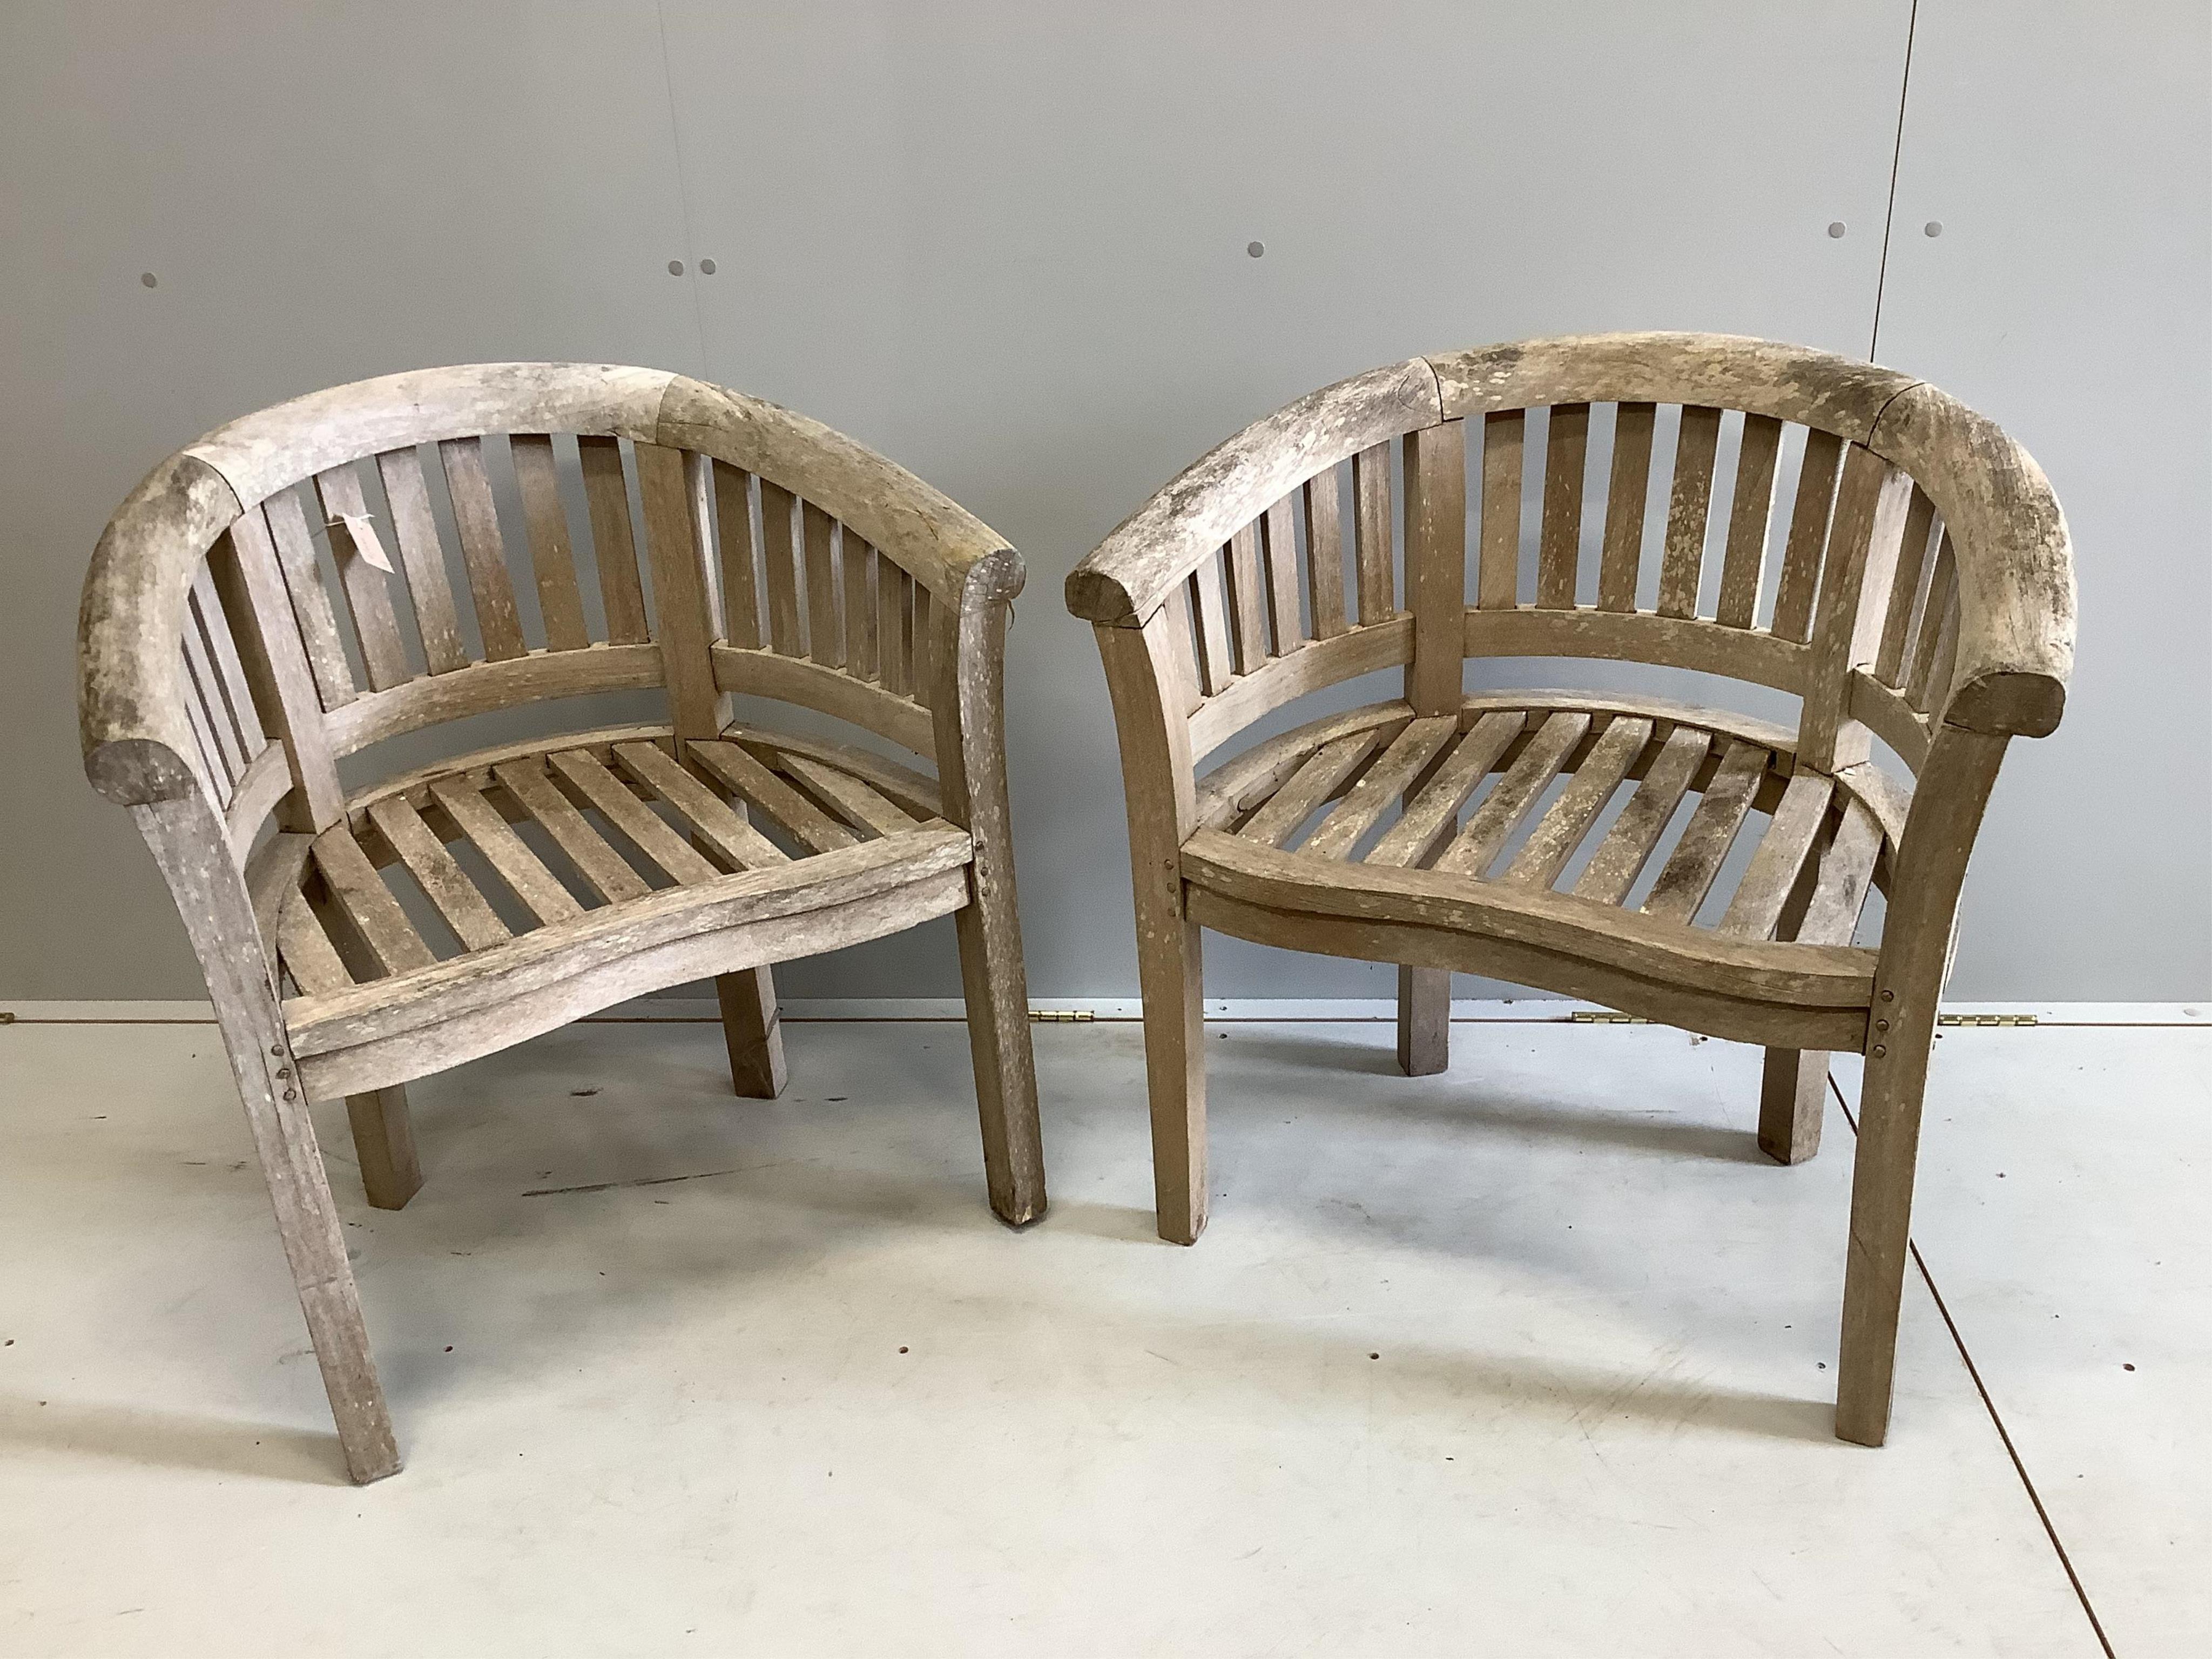 A pair of weathered teak garden 'banana' chairs, width 78cm, depth 52cm, height 82cm. Condition - fair